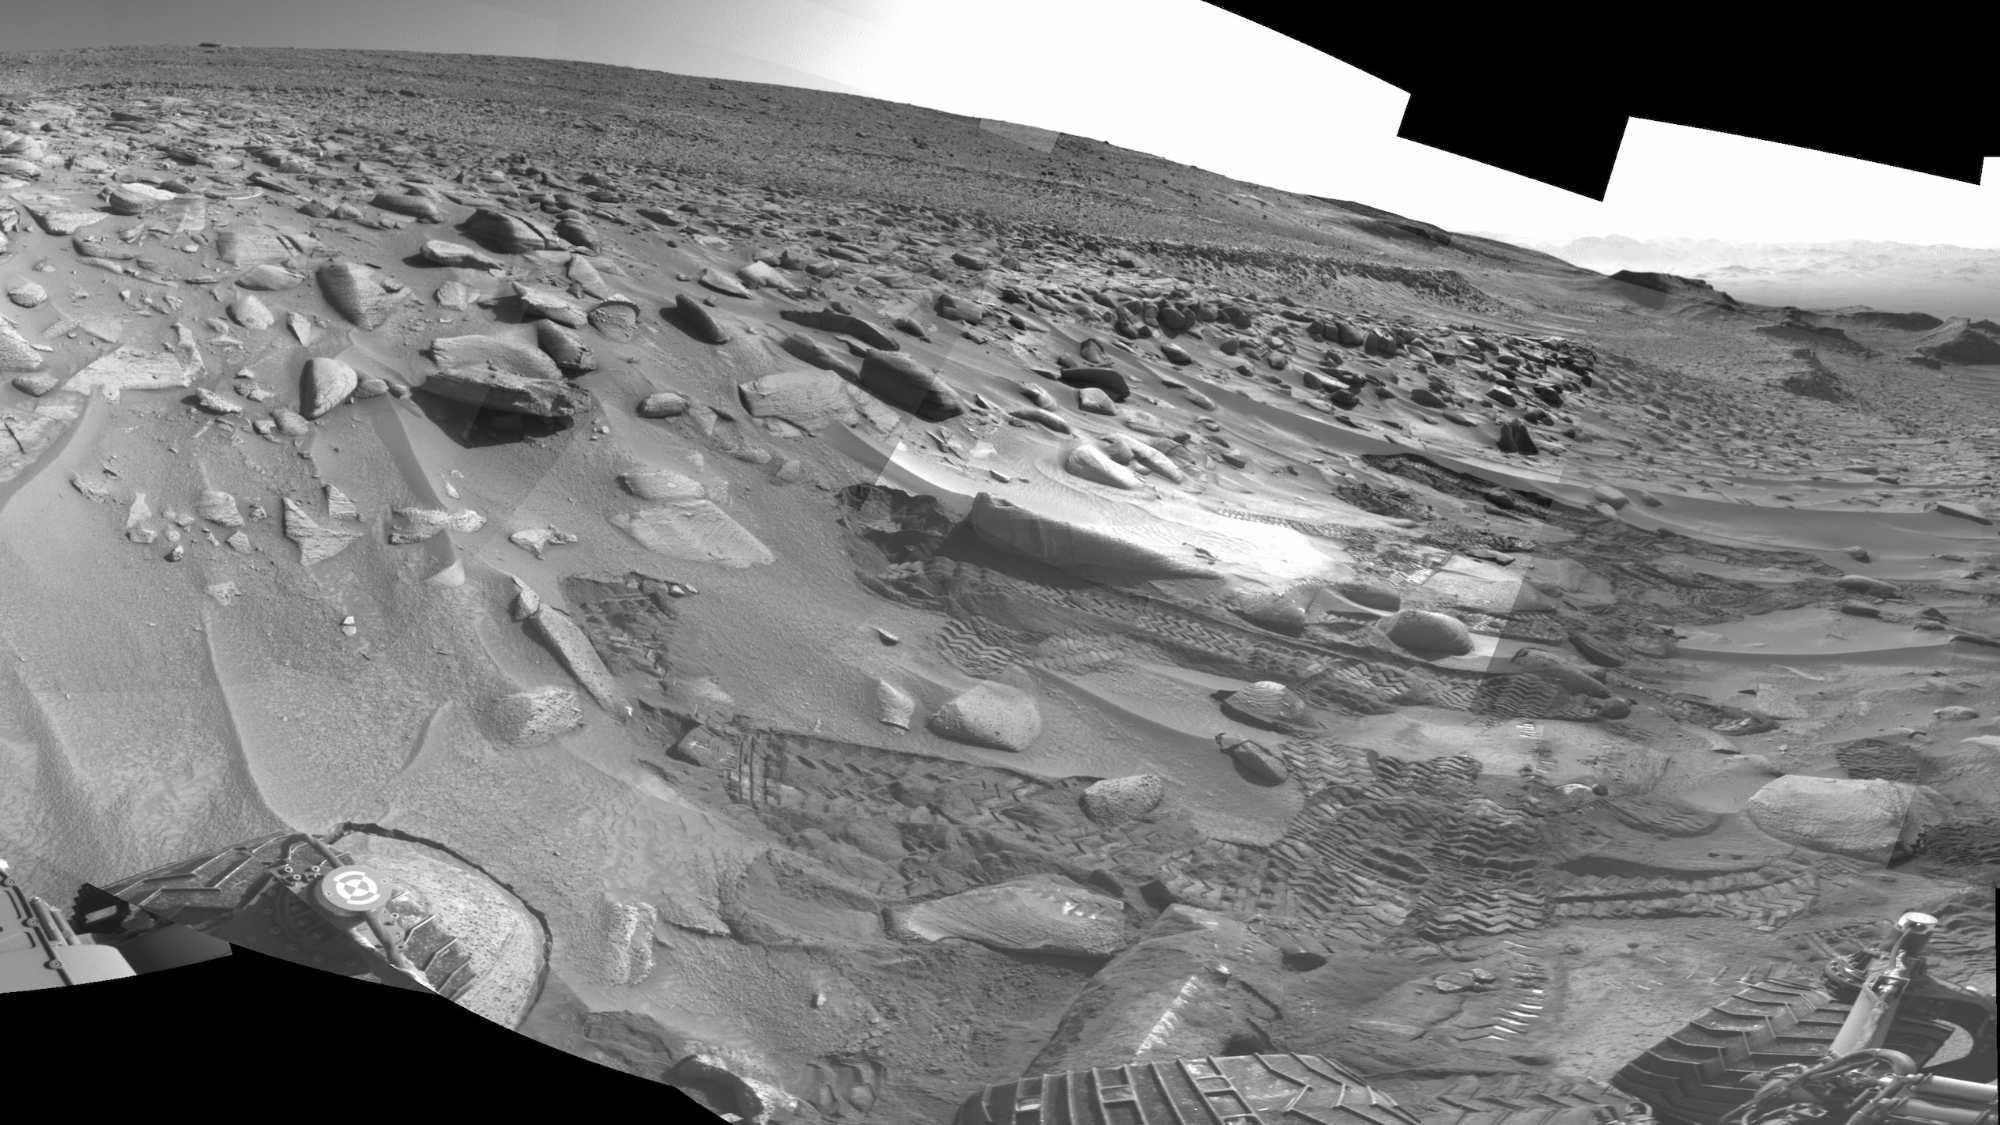 pemandangan hitam dan putih lanskap Mars yang dipenuhi bukit pasir dan bebatuan besar